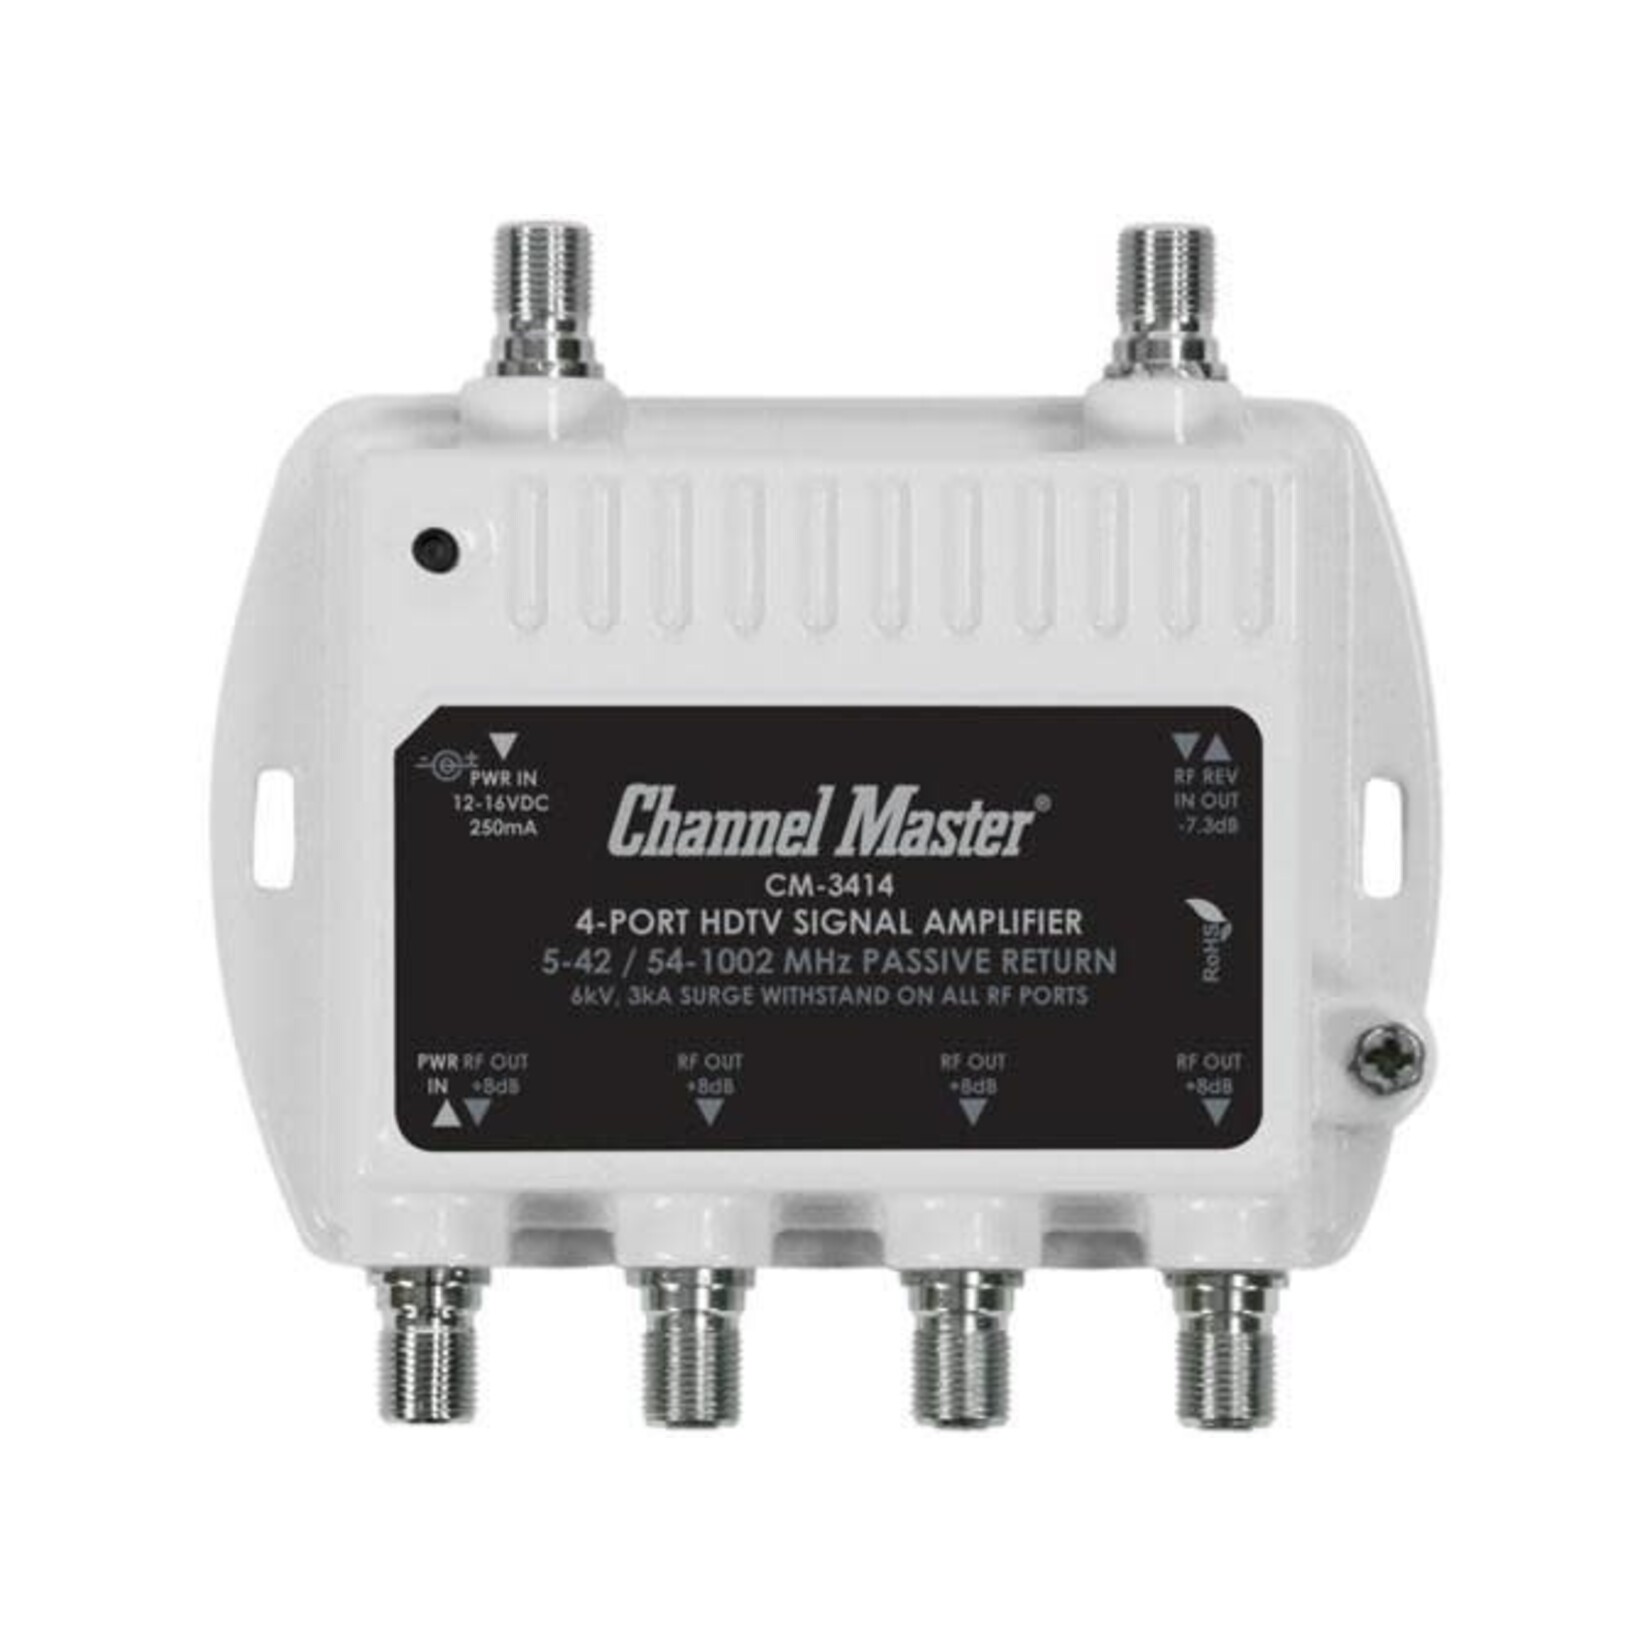 SKY Channel Master 4-Port HDTV Signal Amplifier